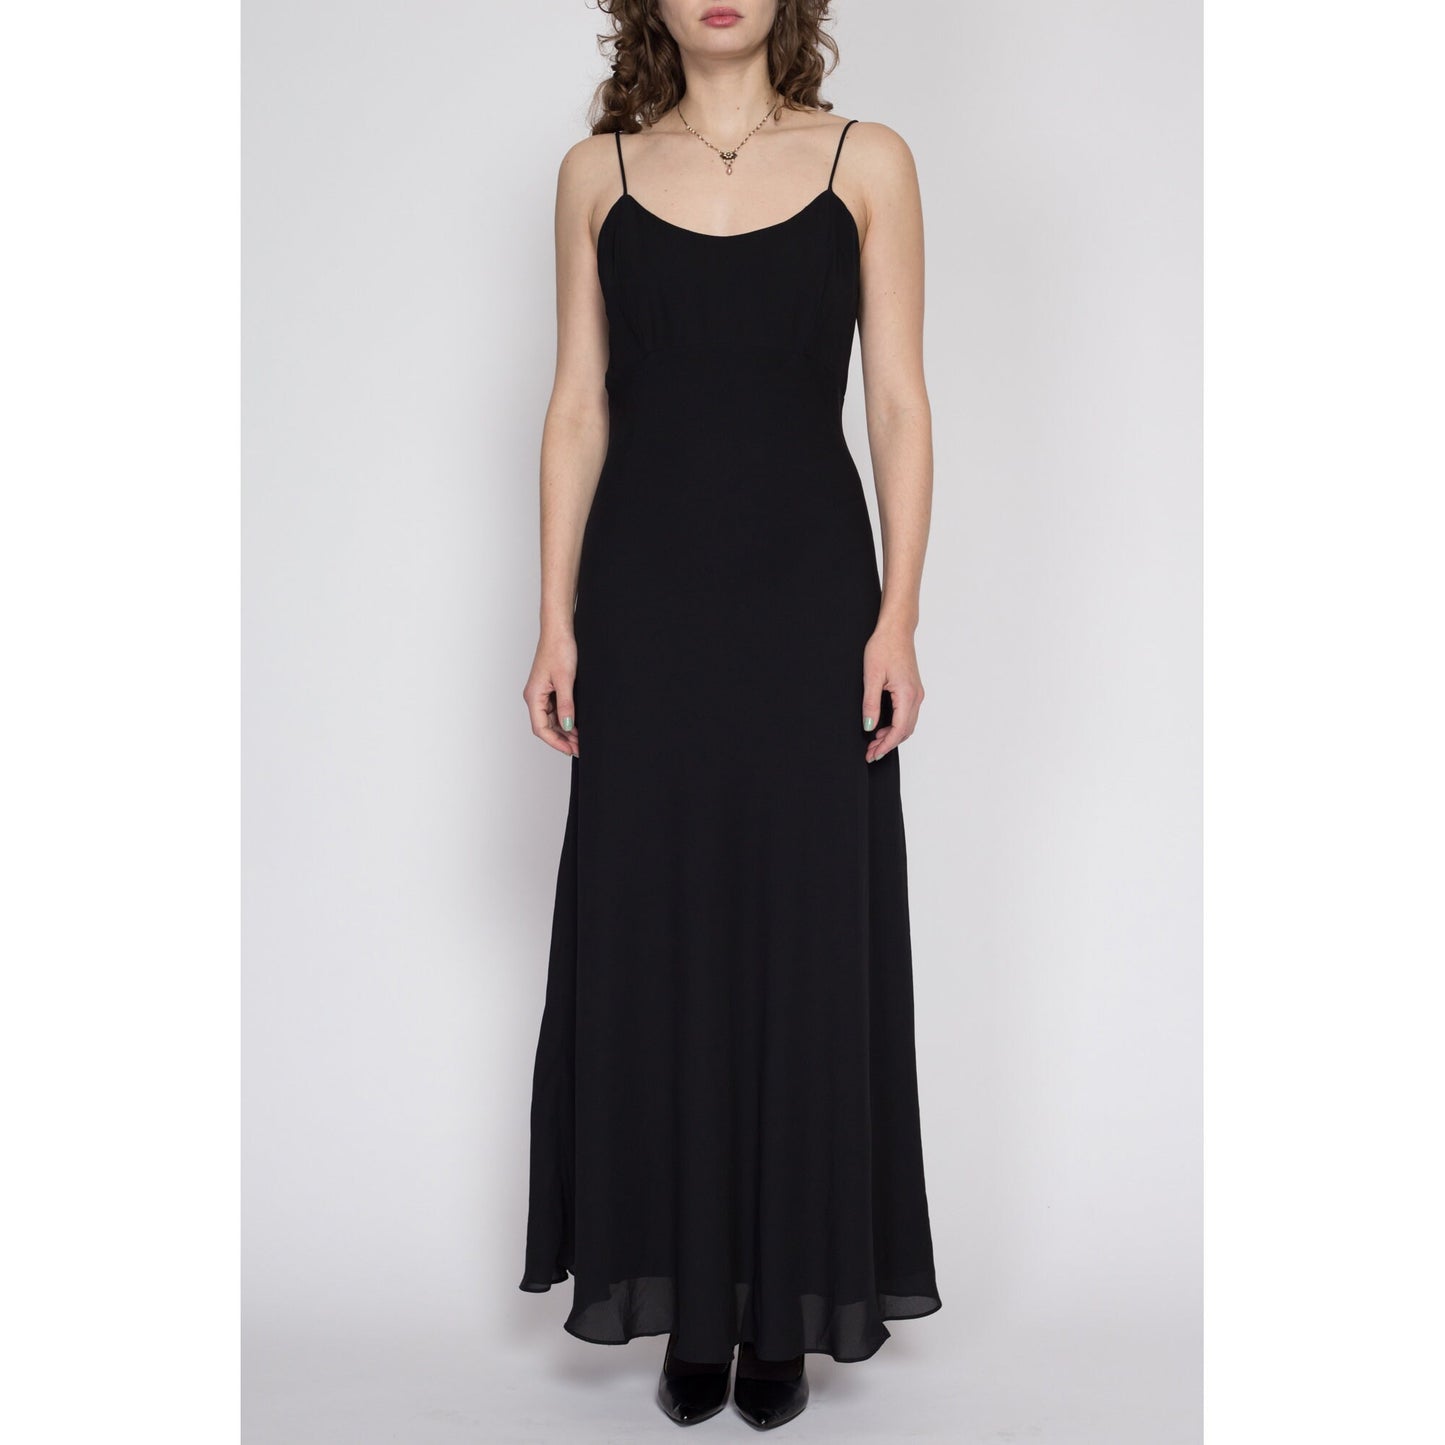 Medium 90s Black Flowy Evening Gown | Vintage Spaghetti Strap Formal Maxi Dress